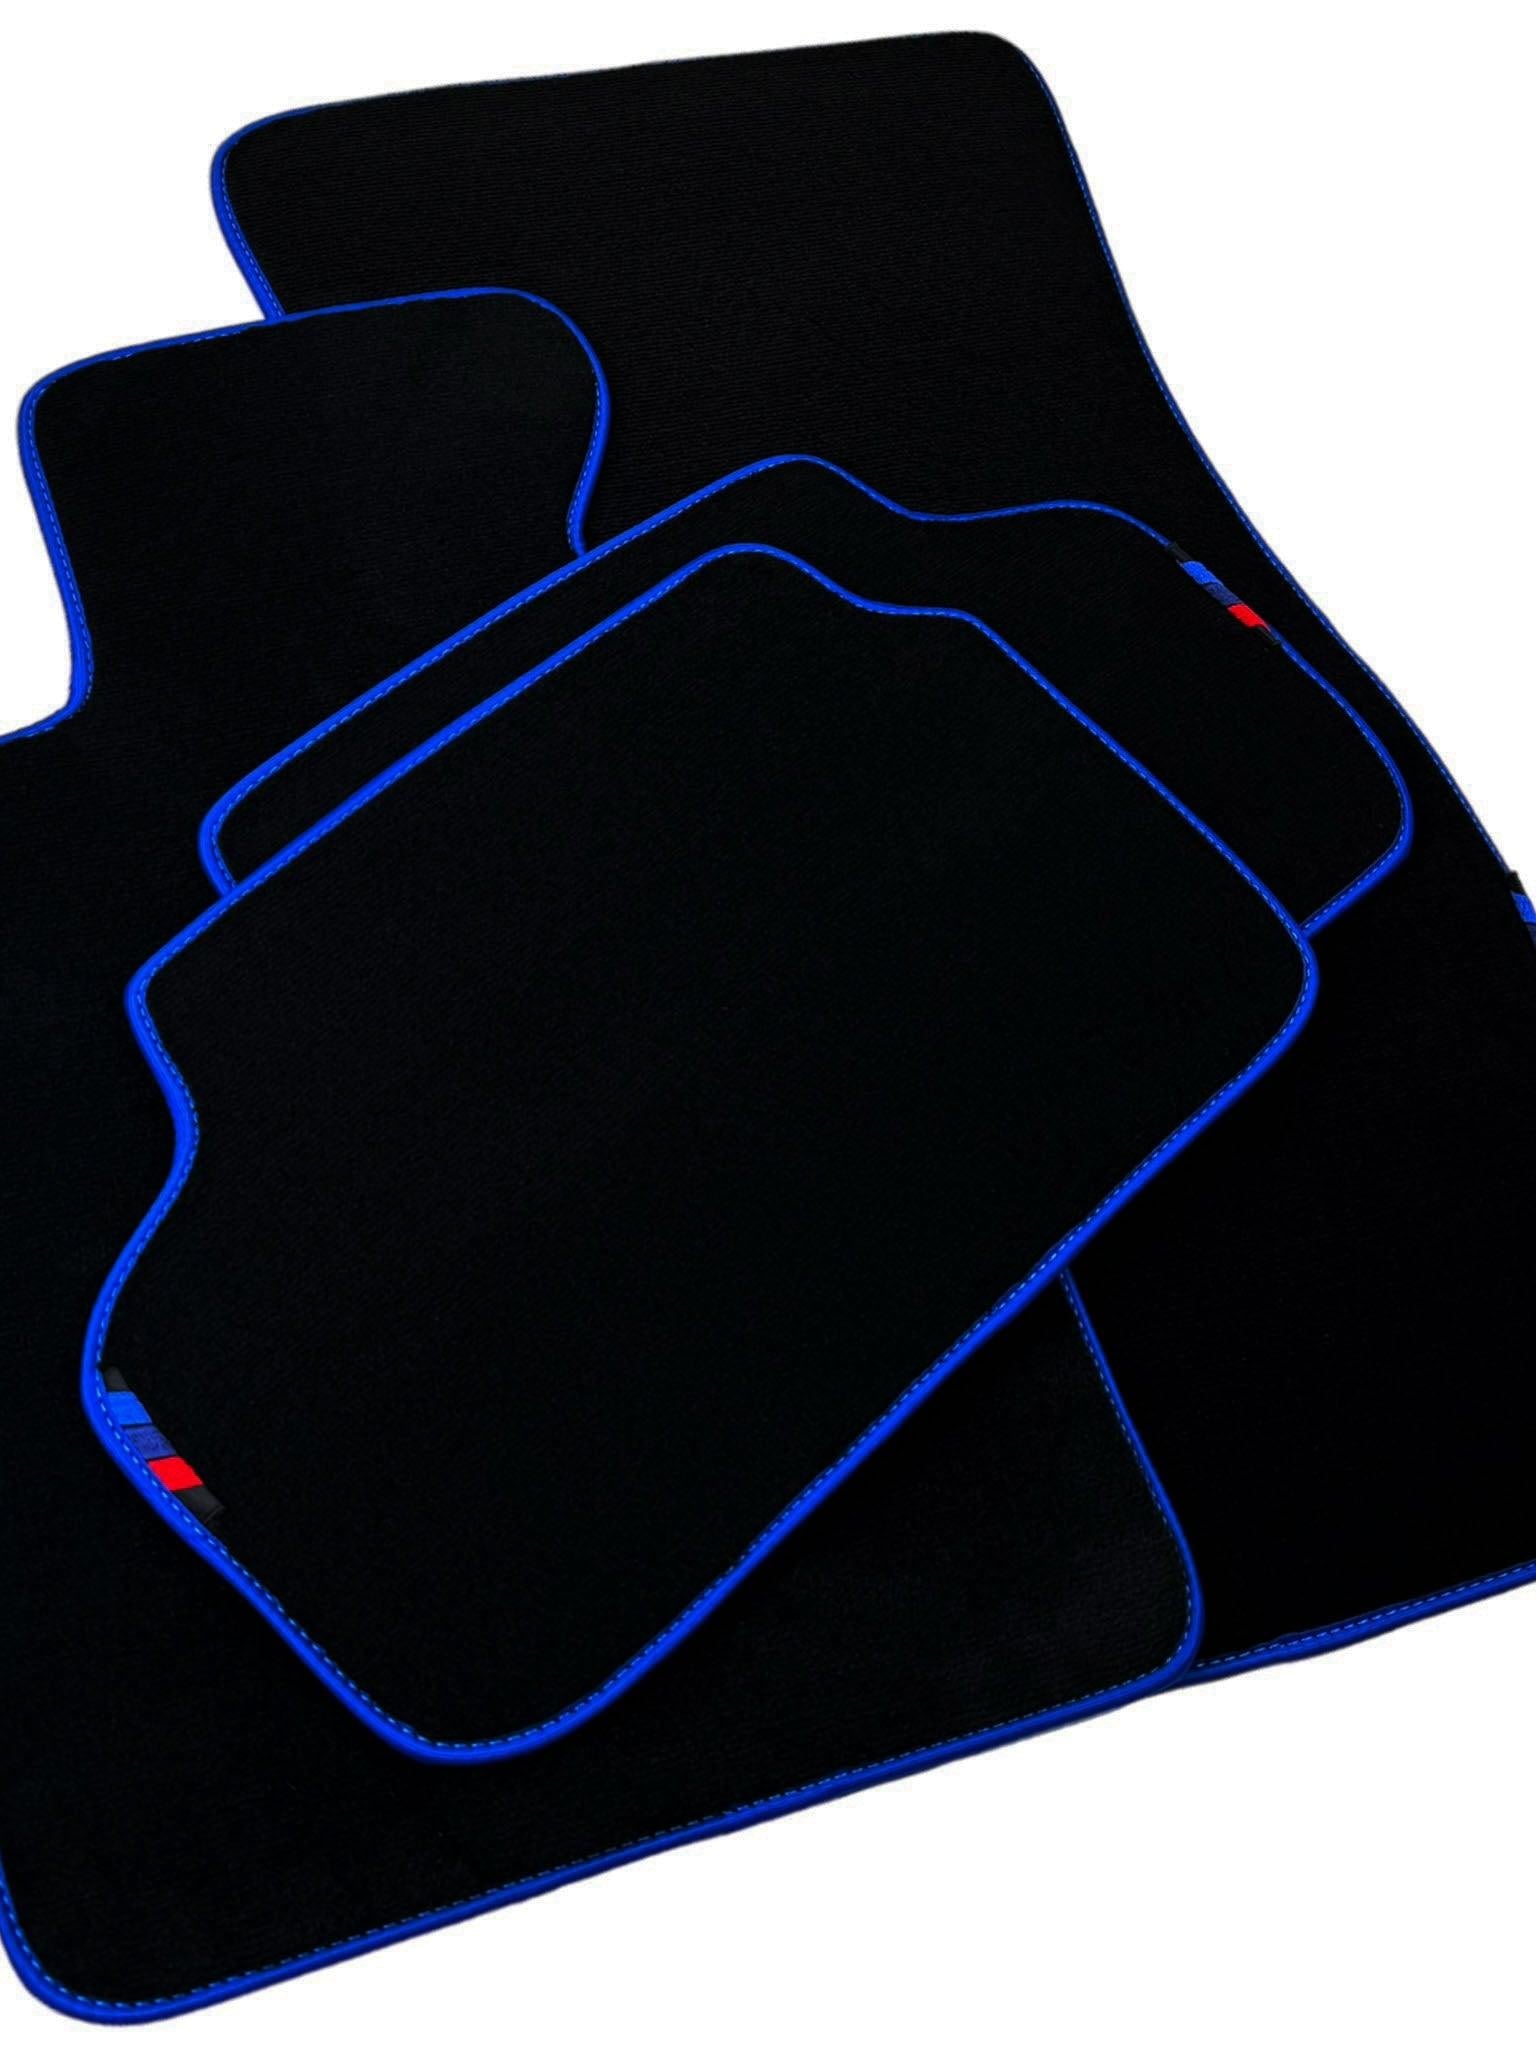 Black Floor Floor Mats For BMW 4 Series F32 | Blue Trim